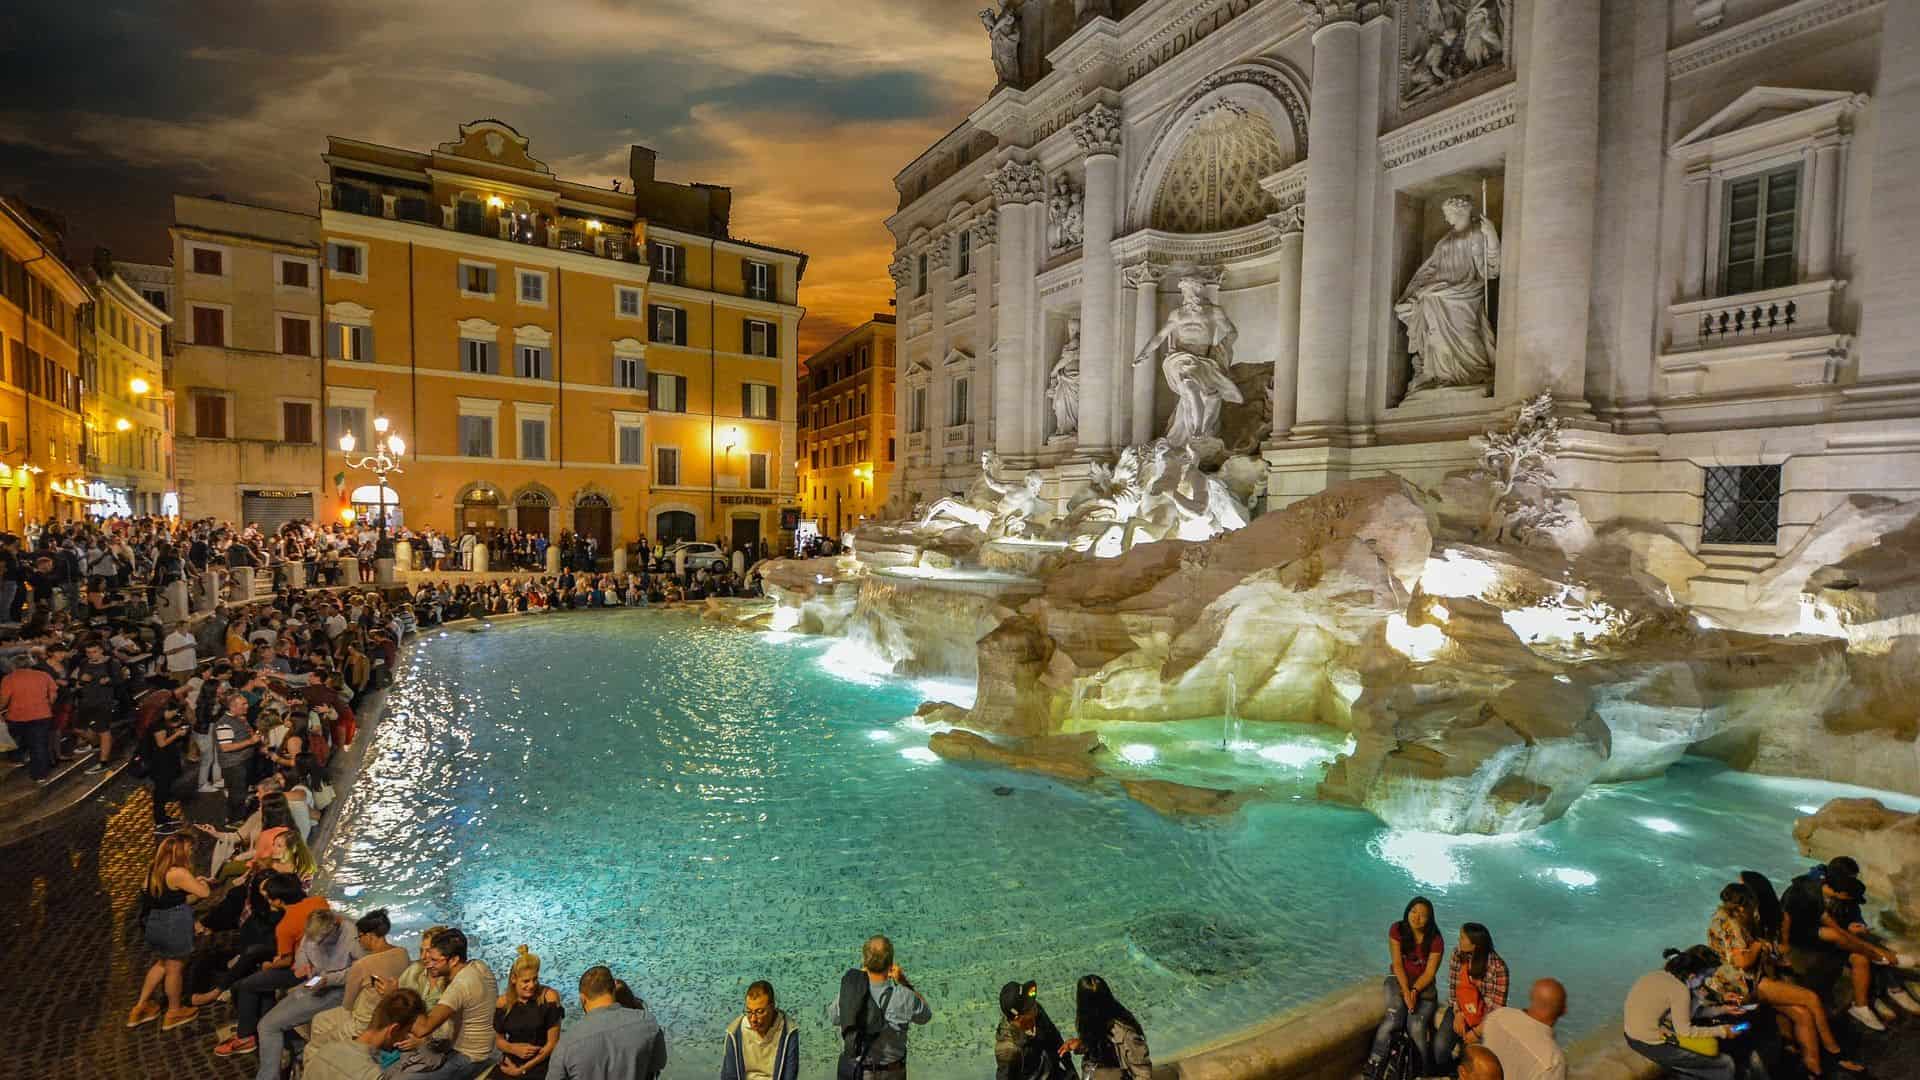 Visit the Trevi Fountain at the Piazza di Trevi (Rome)